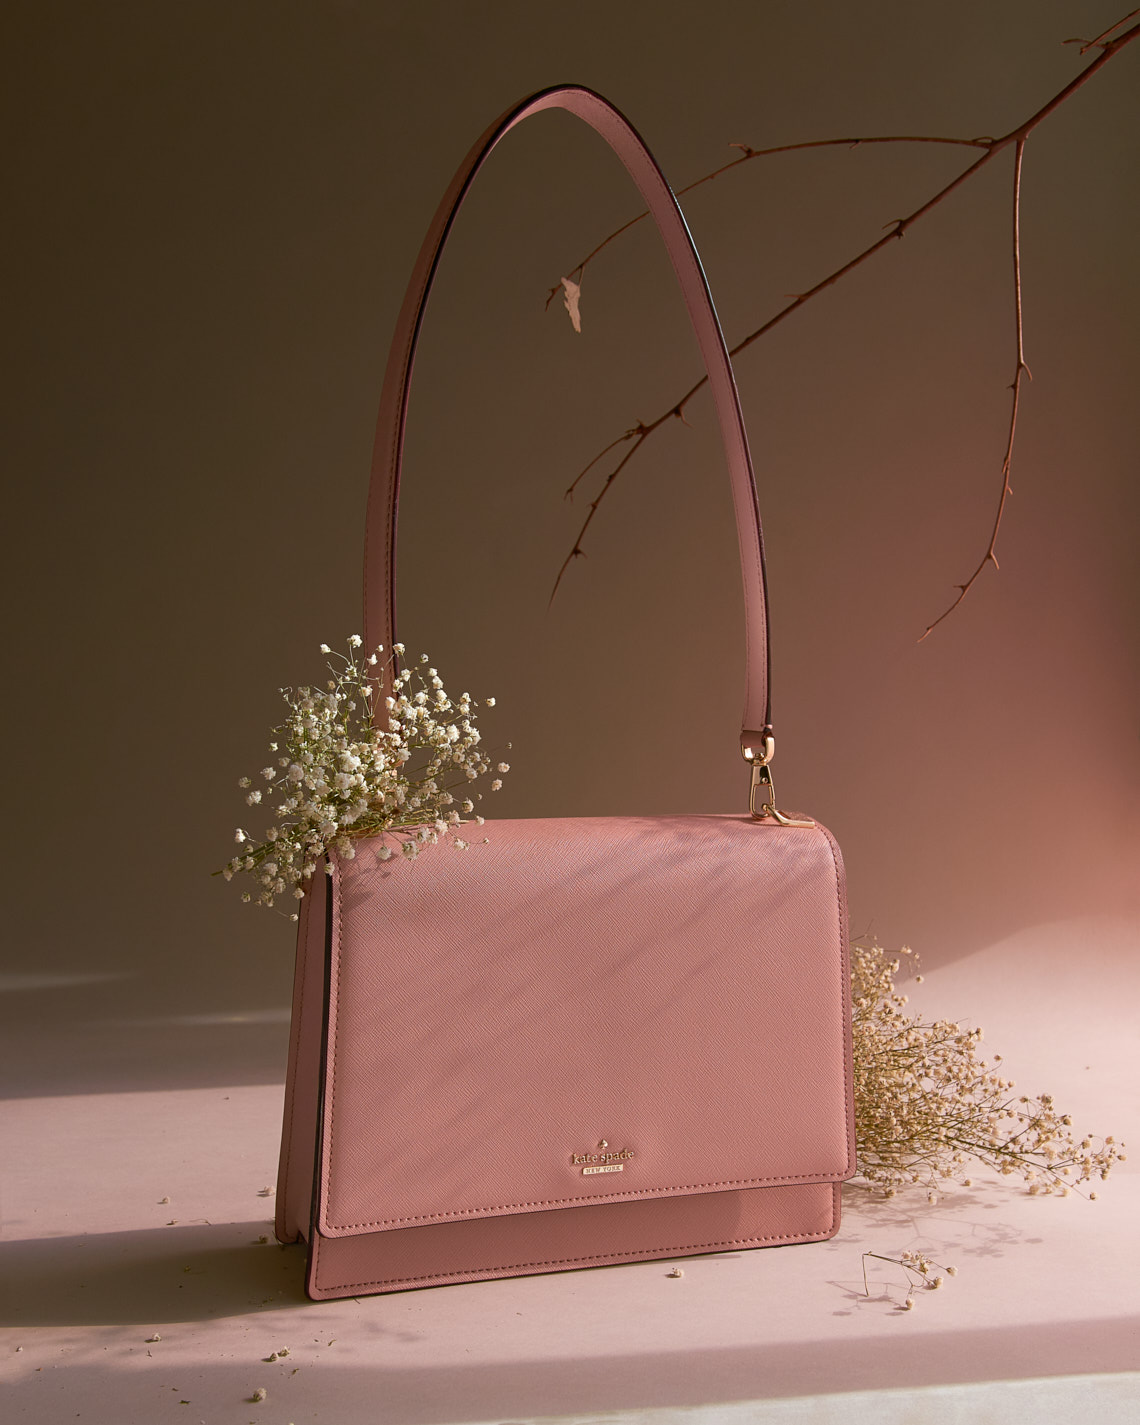 Kate Spade Pink Bag - Product Photography LA Charlie Sin